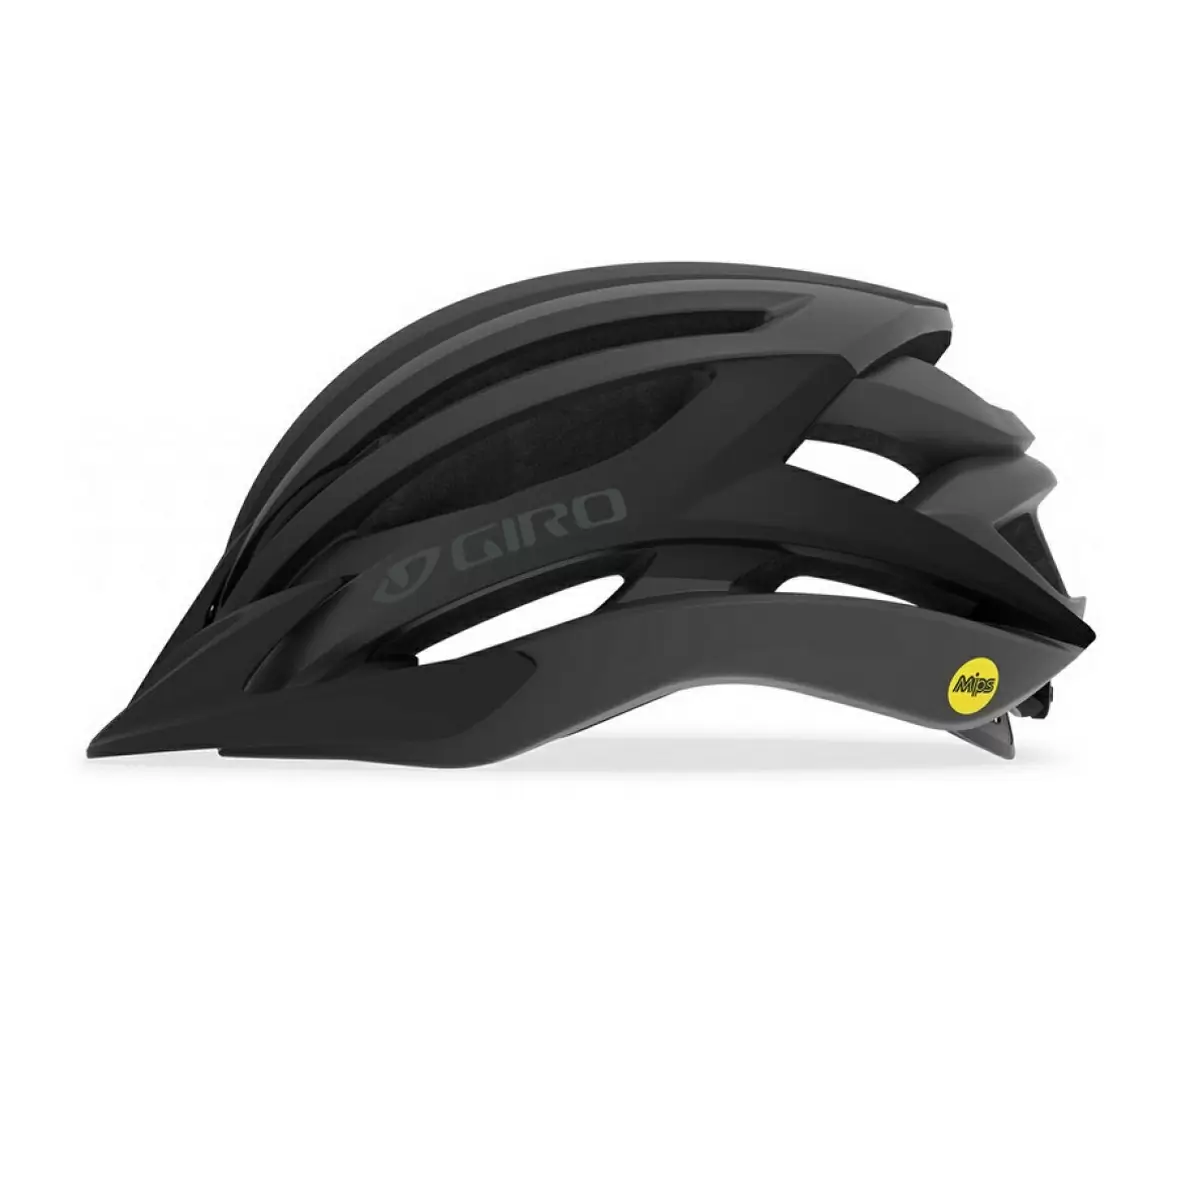 Helmet Artex mips matt black size M (55-59cm) #1